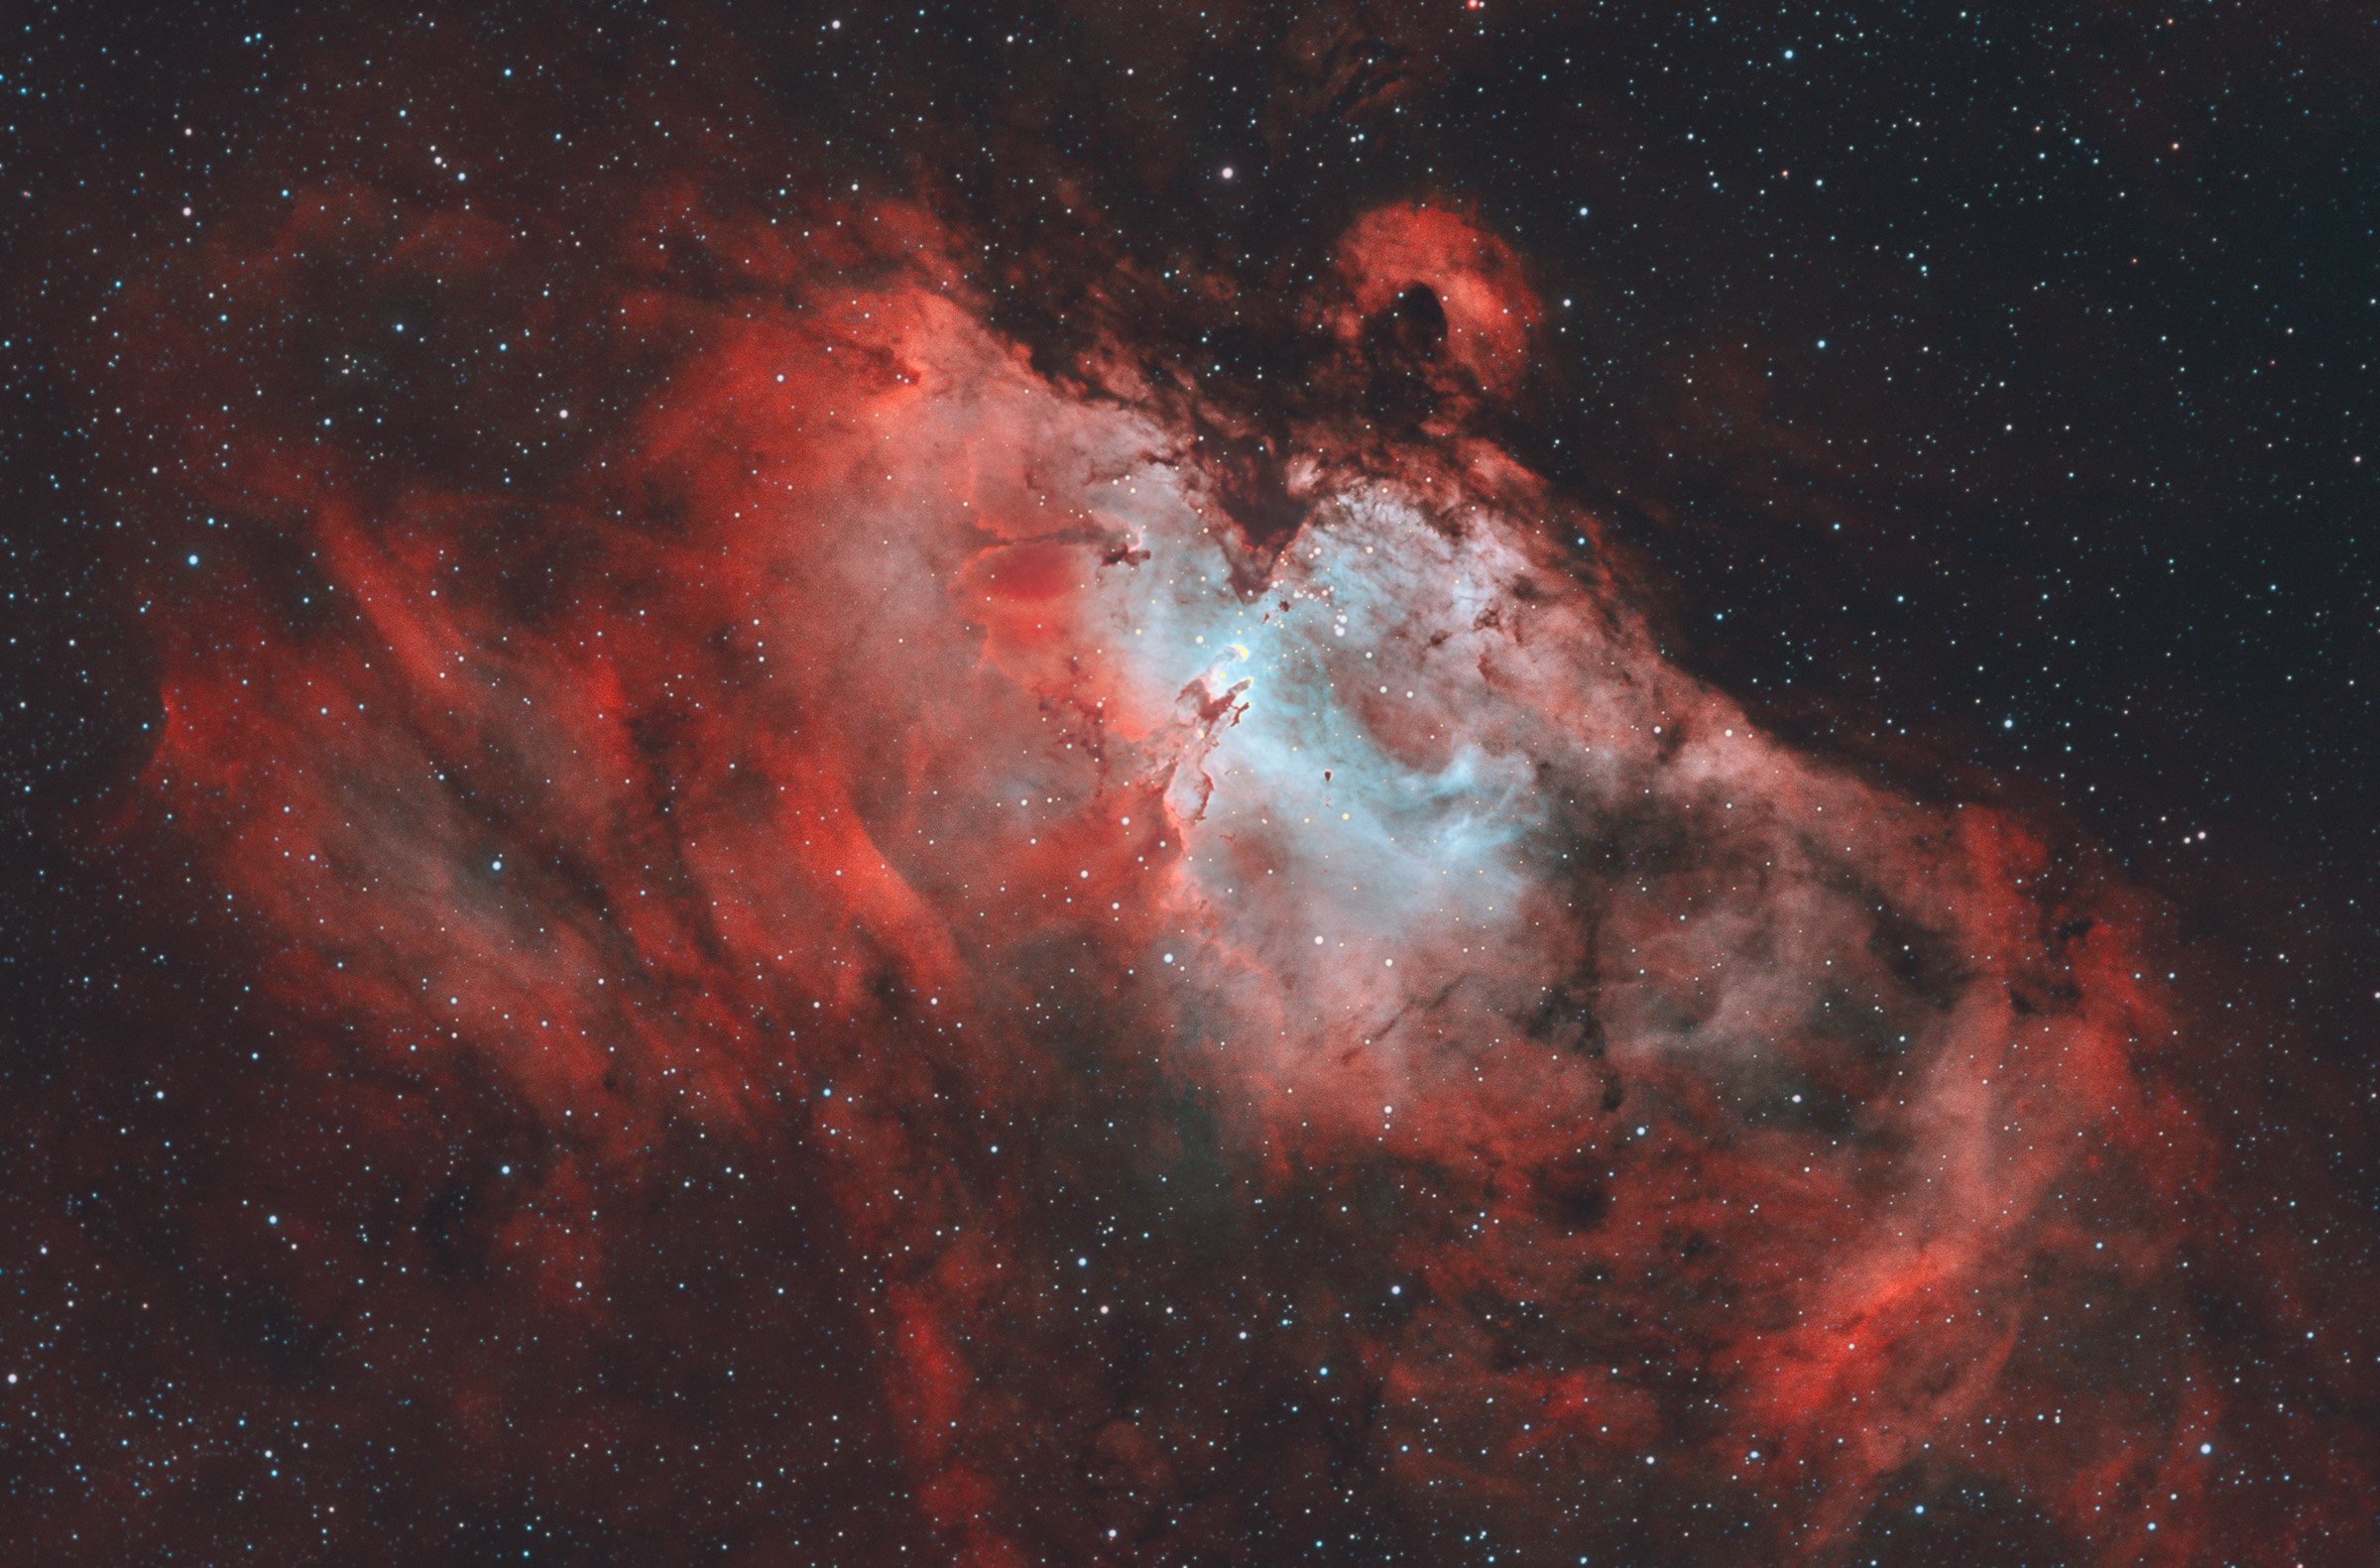 Eagle Nebula (M16) in Bicolor Presentation